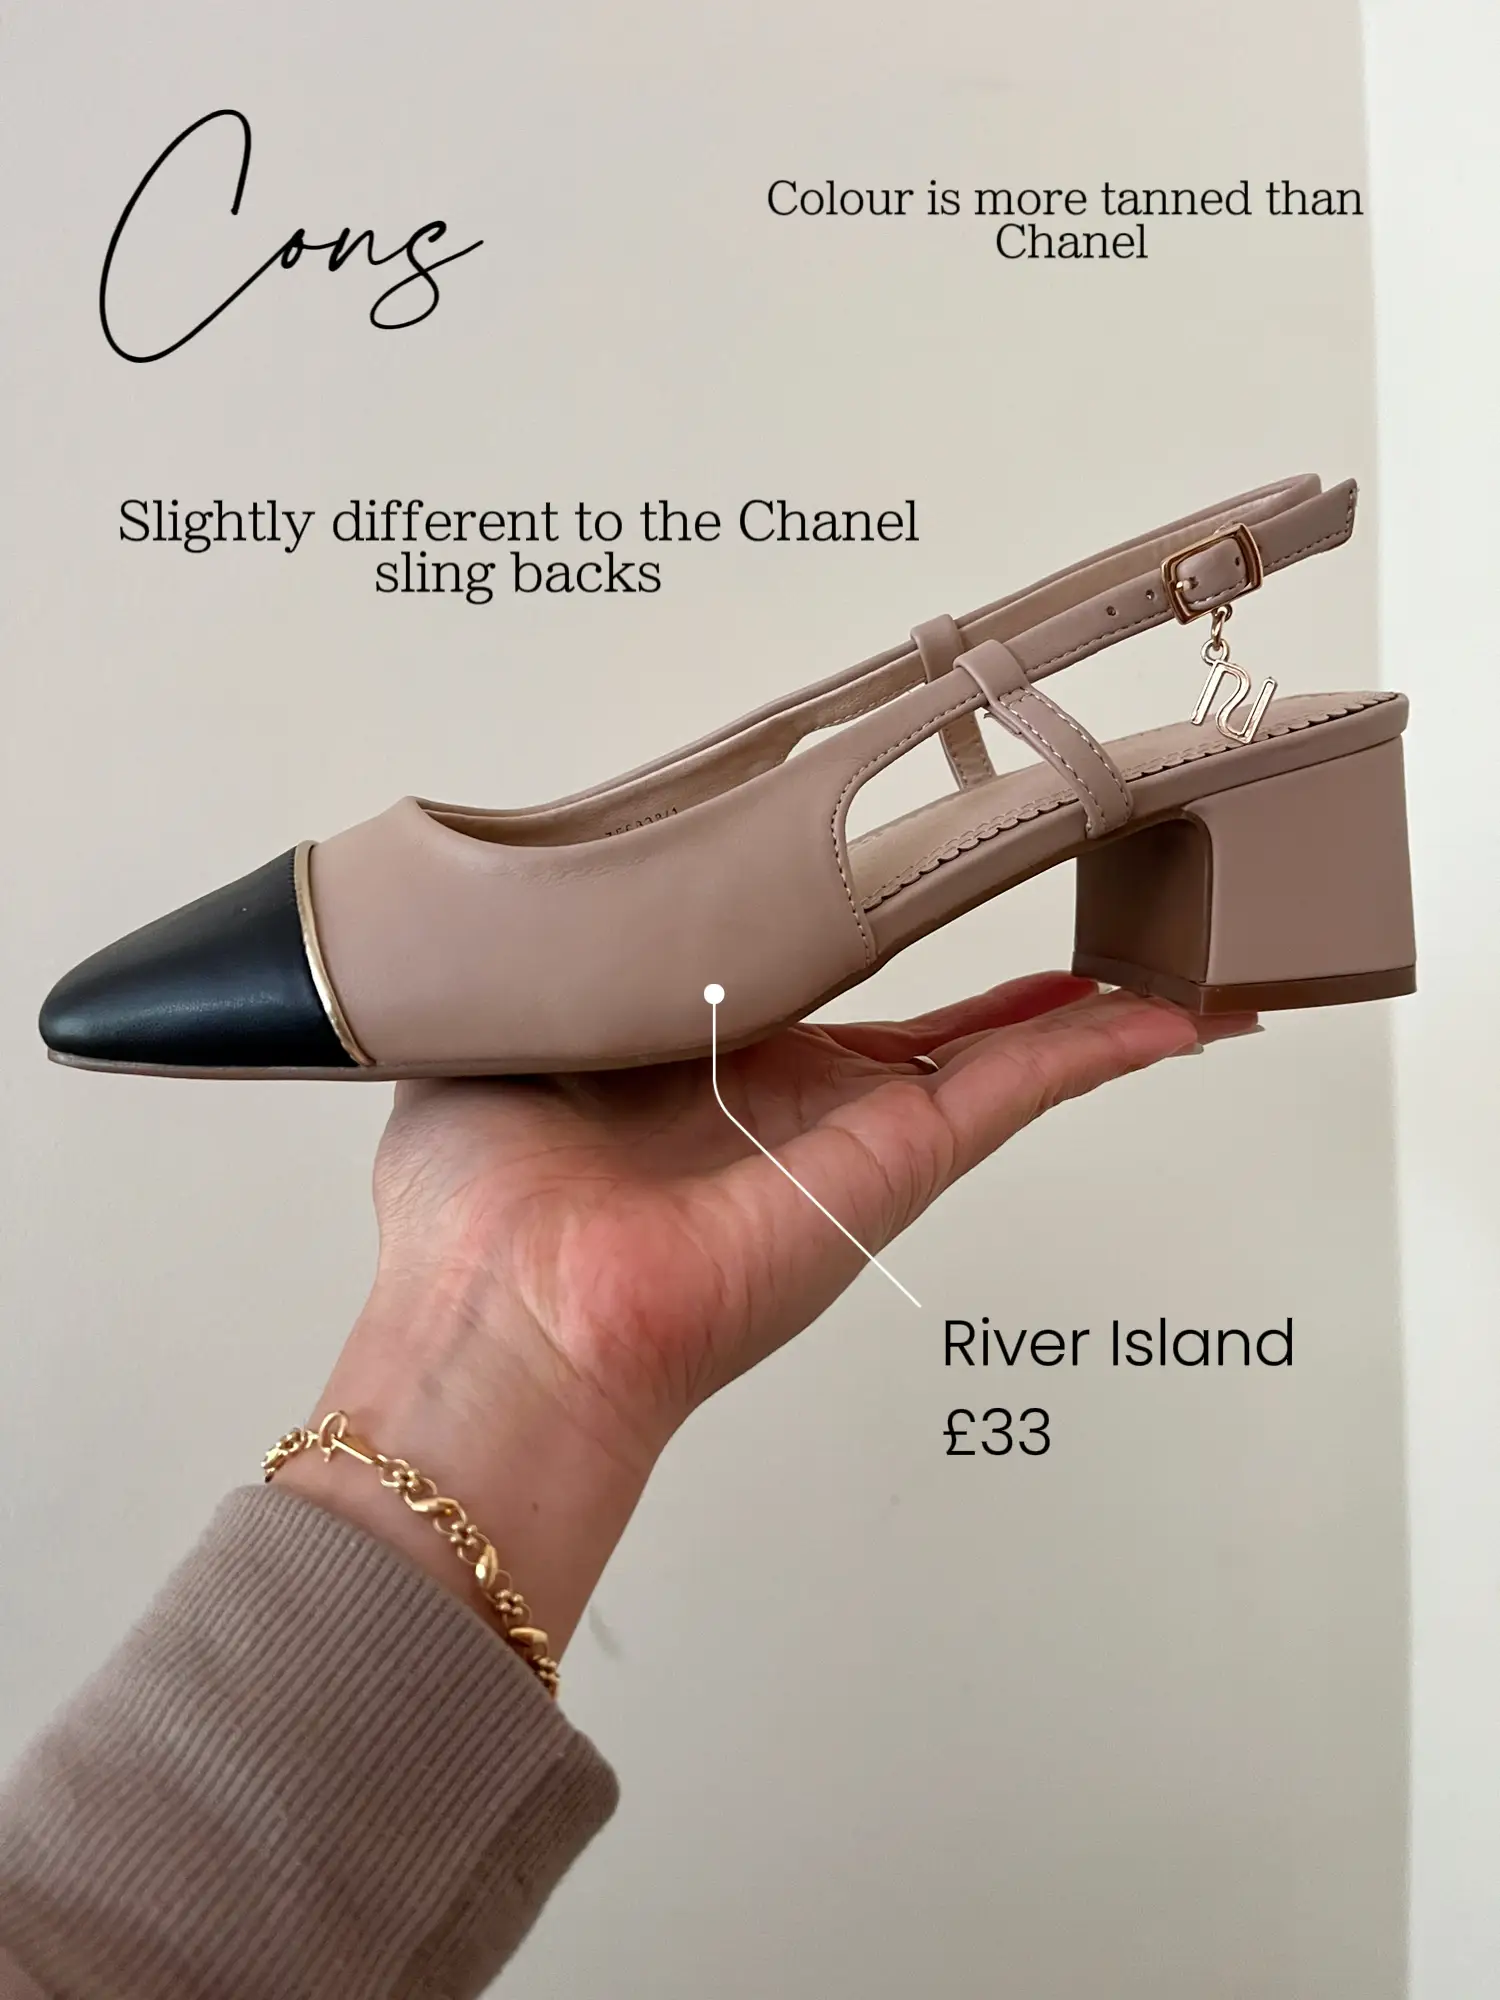 Chanel Slingback Dupes + Comparison Guide